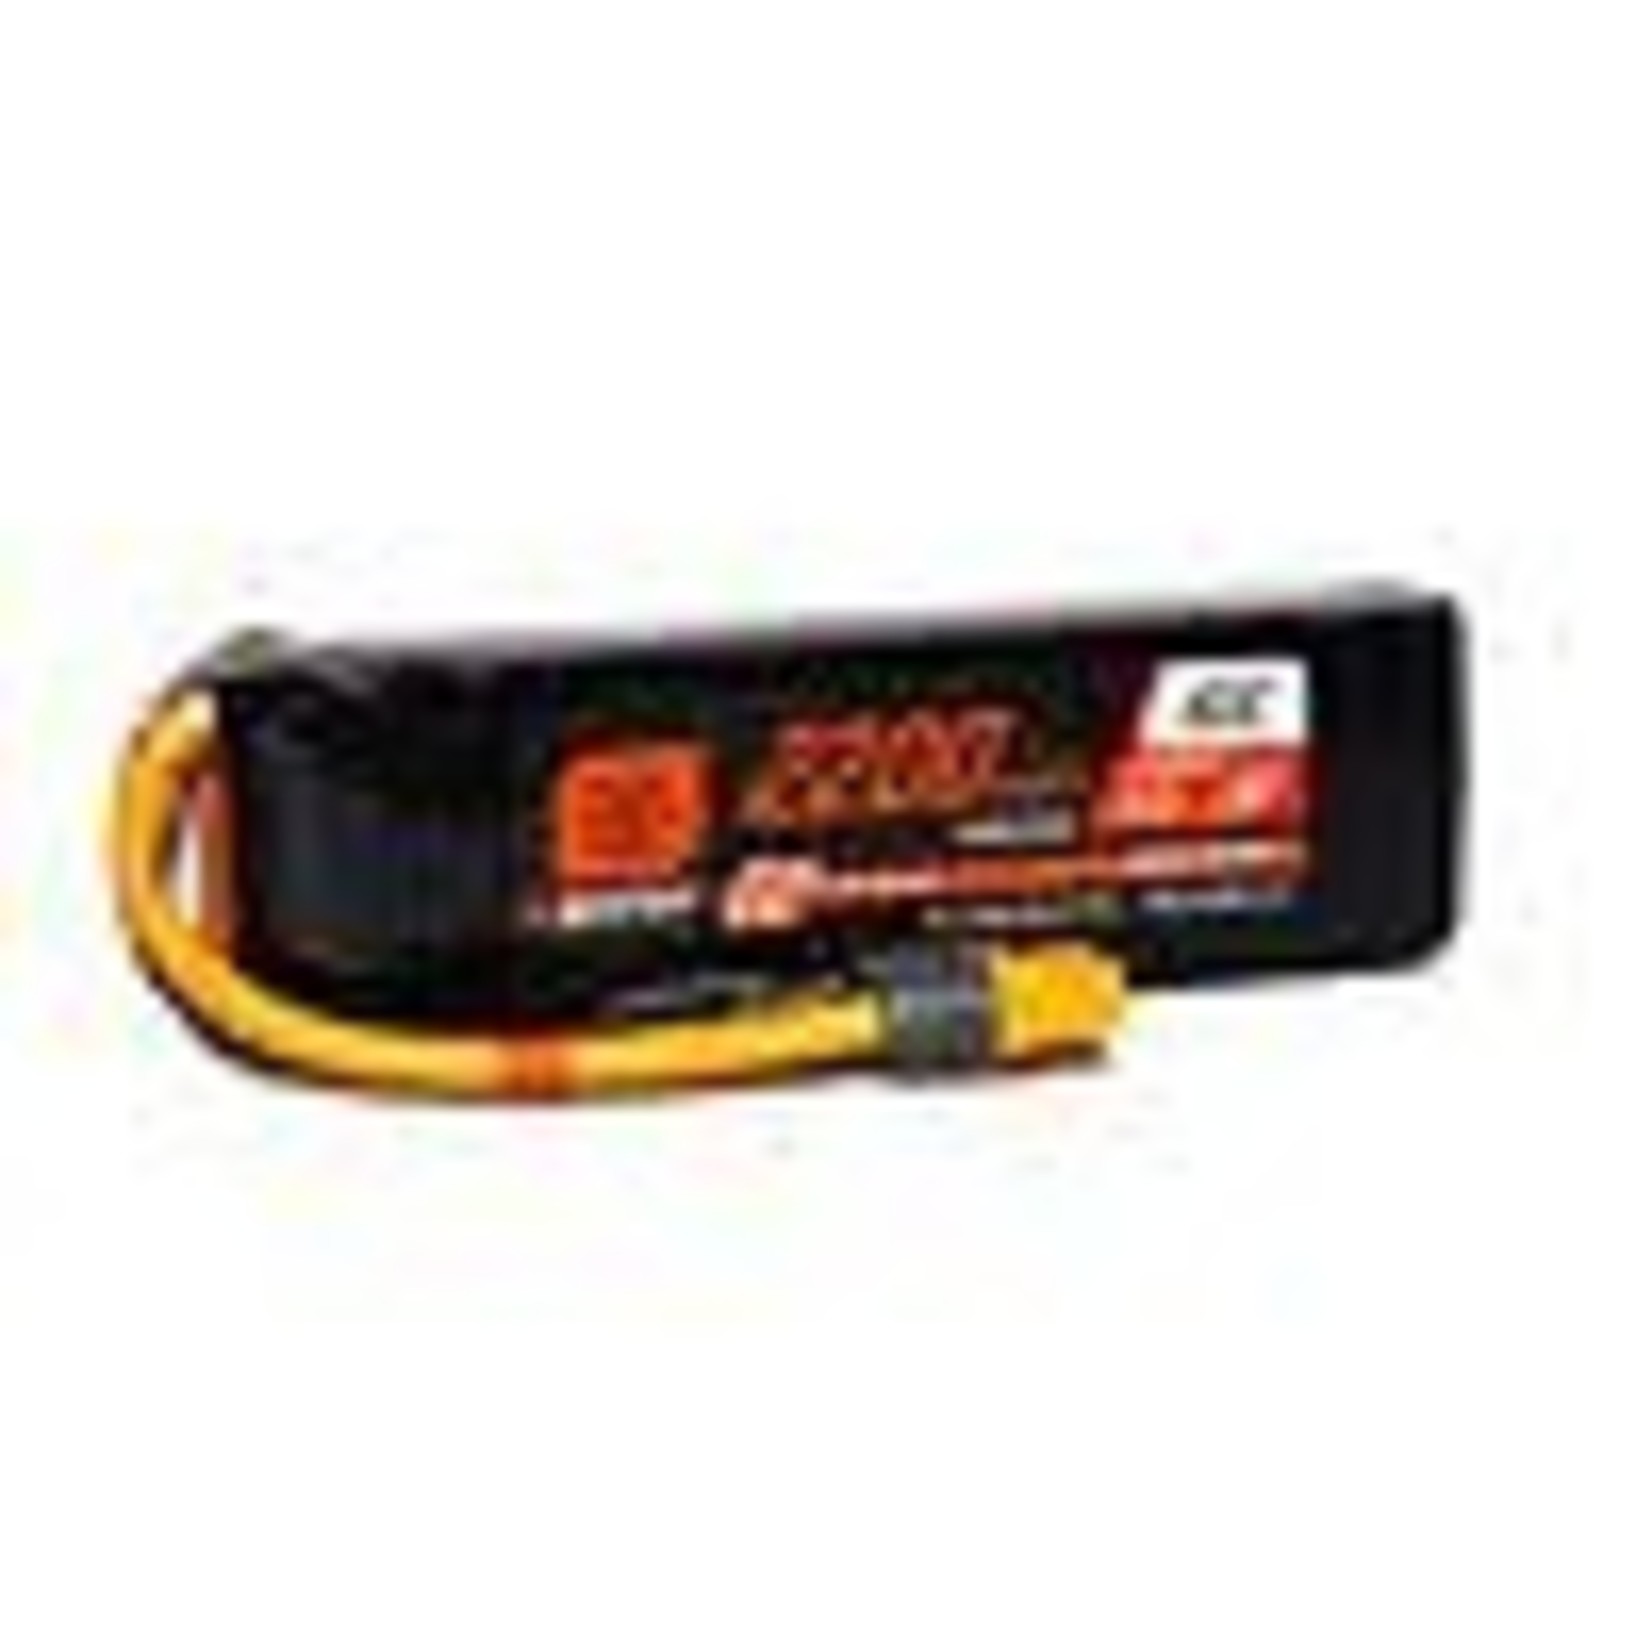 SPEC KTRUM SPMX223S50   11.1V 2200mAh 3S 50C Smart G2 LiPo Battery: IC3